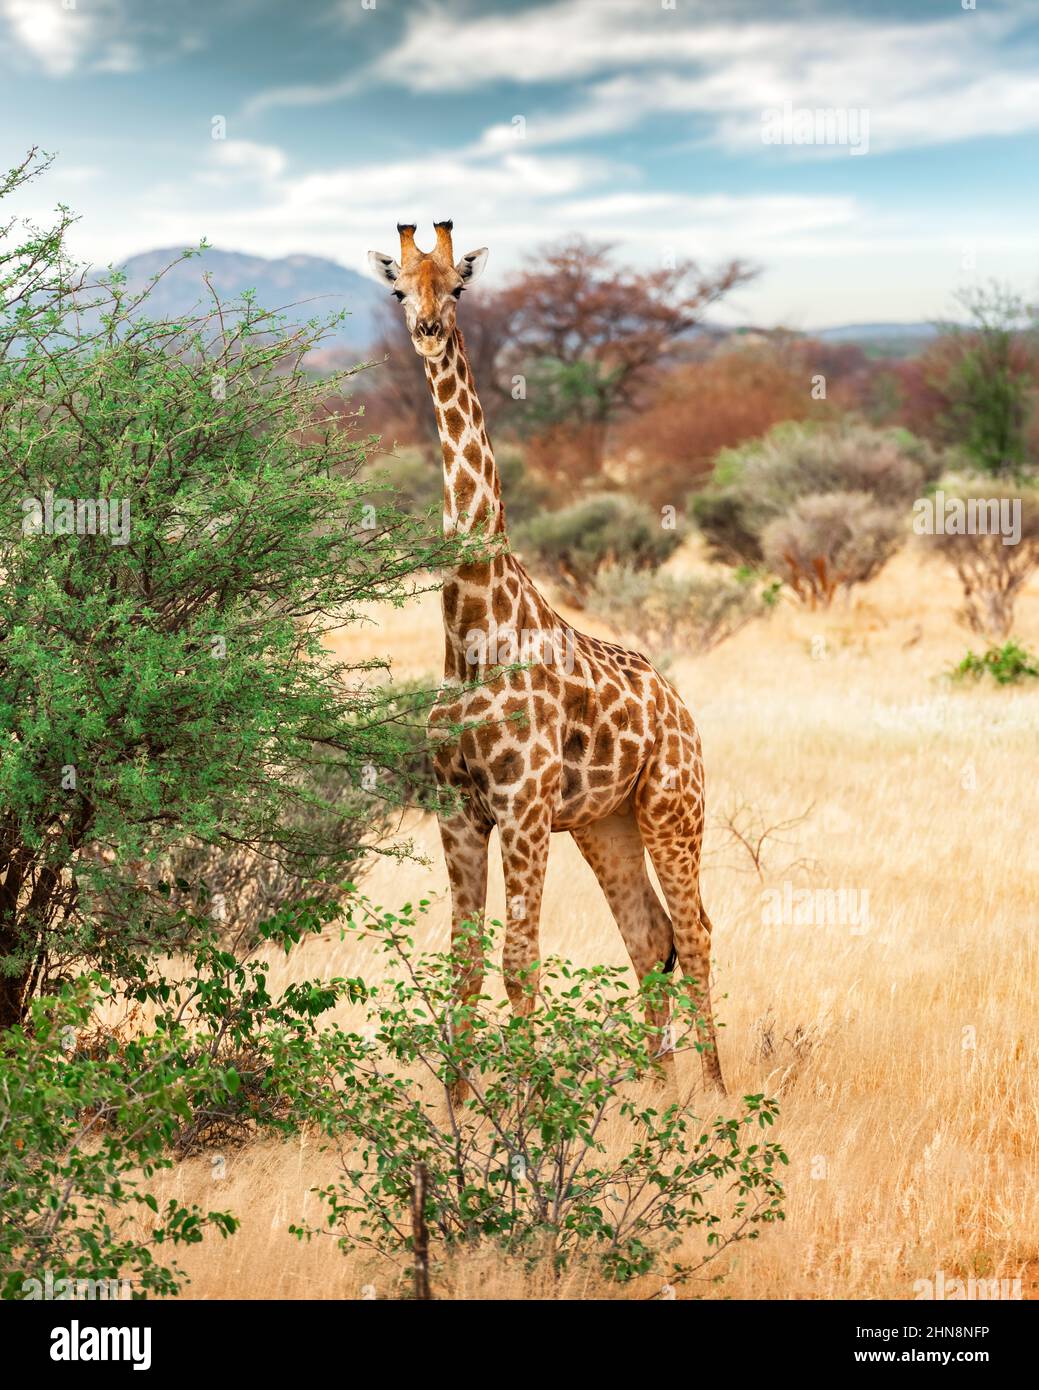 Young giraffe walking in african bush in Etosha National Park, Namibia, Africa. Wildlife photography Stock Photo